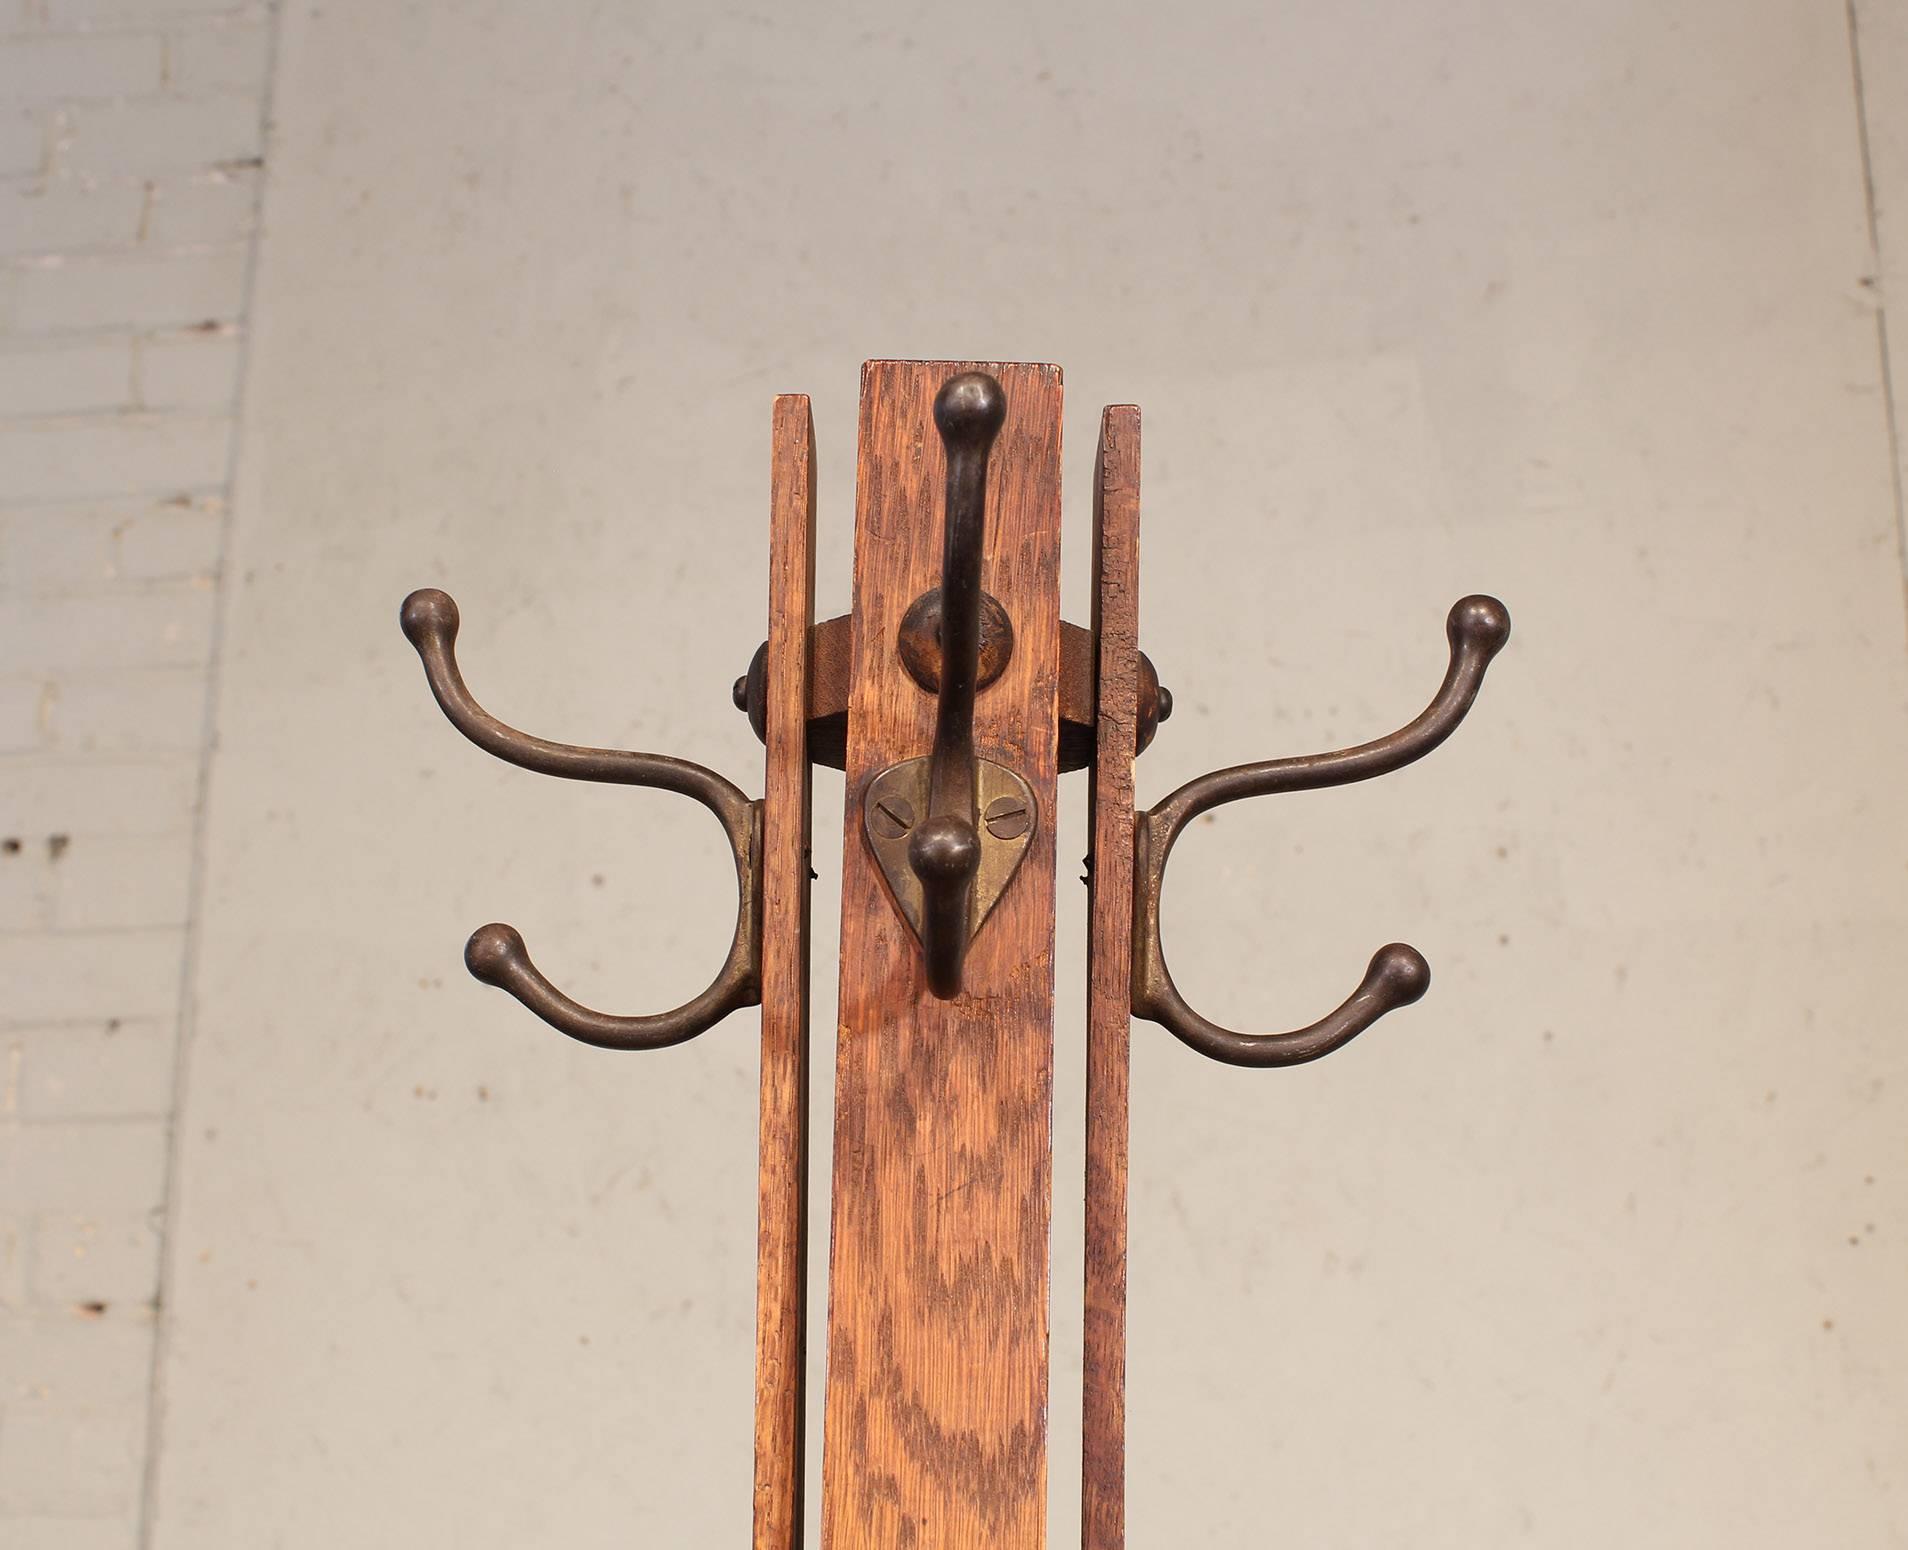 Metal Vintage Arts & Crafts Style Wooden Coat Rack or Stand